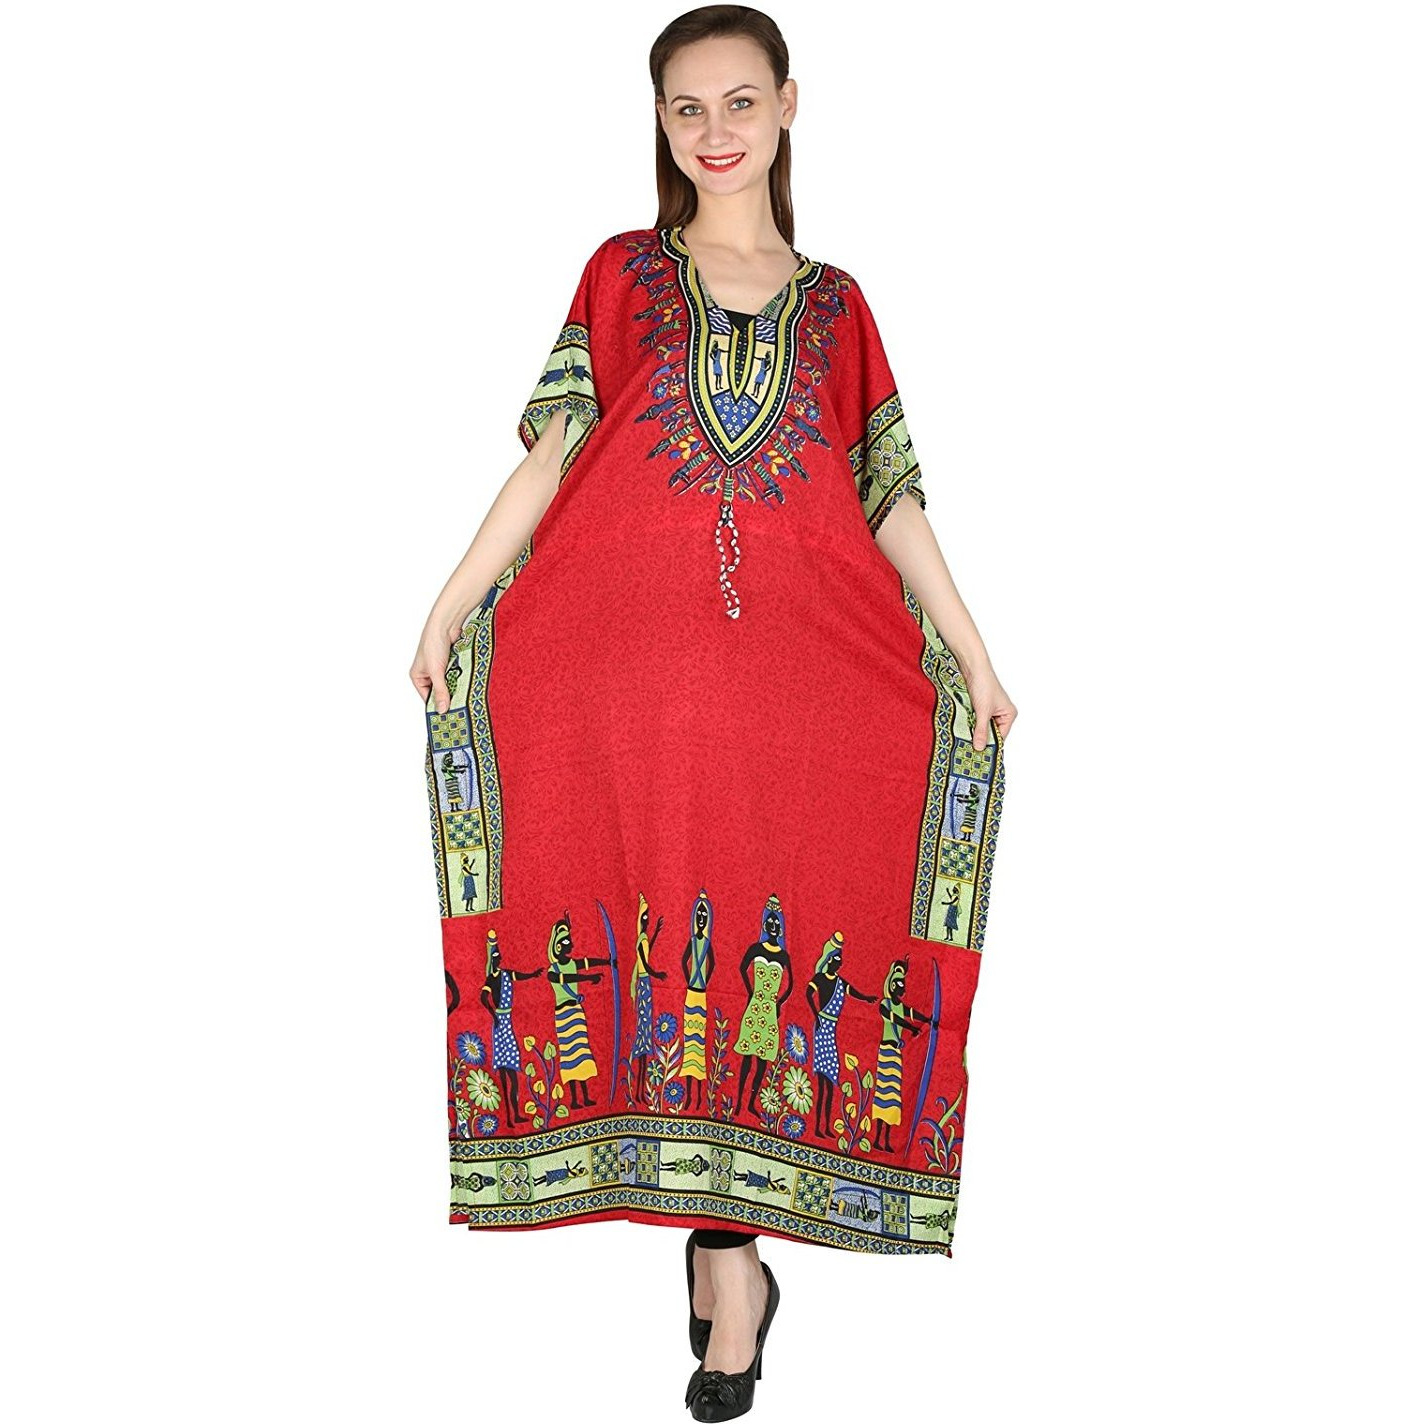 Winmaarc African Dashiki Kaftan Boho Hippe Dress Long length Maxi Caftan